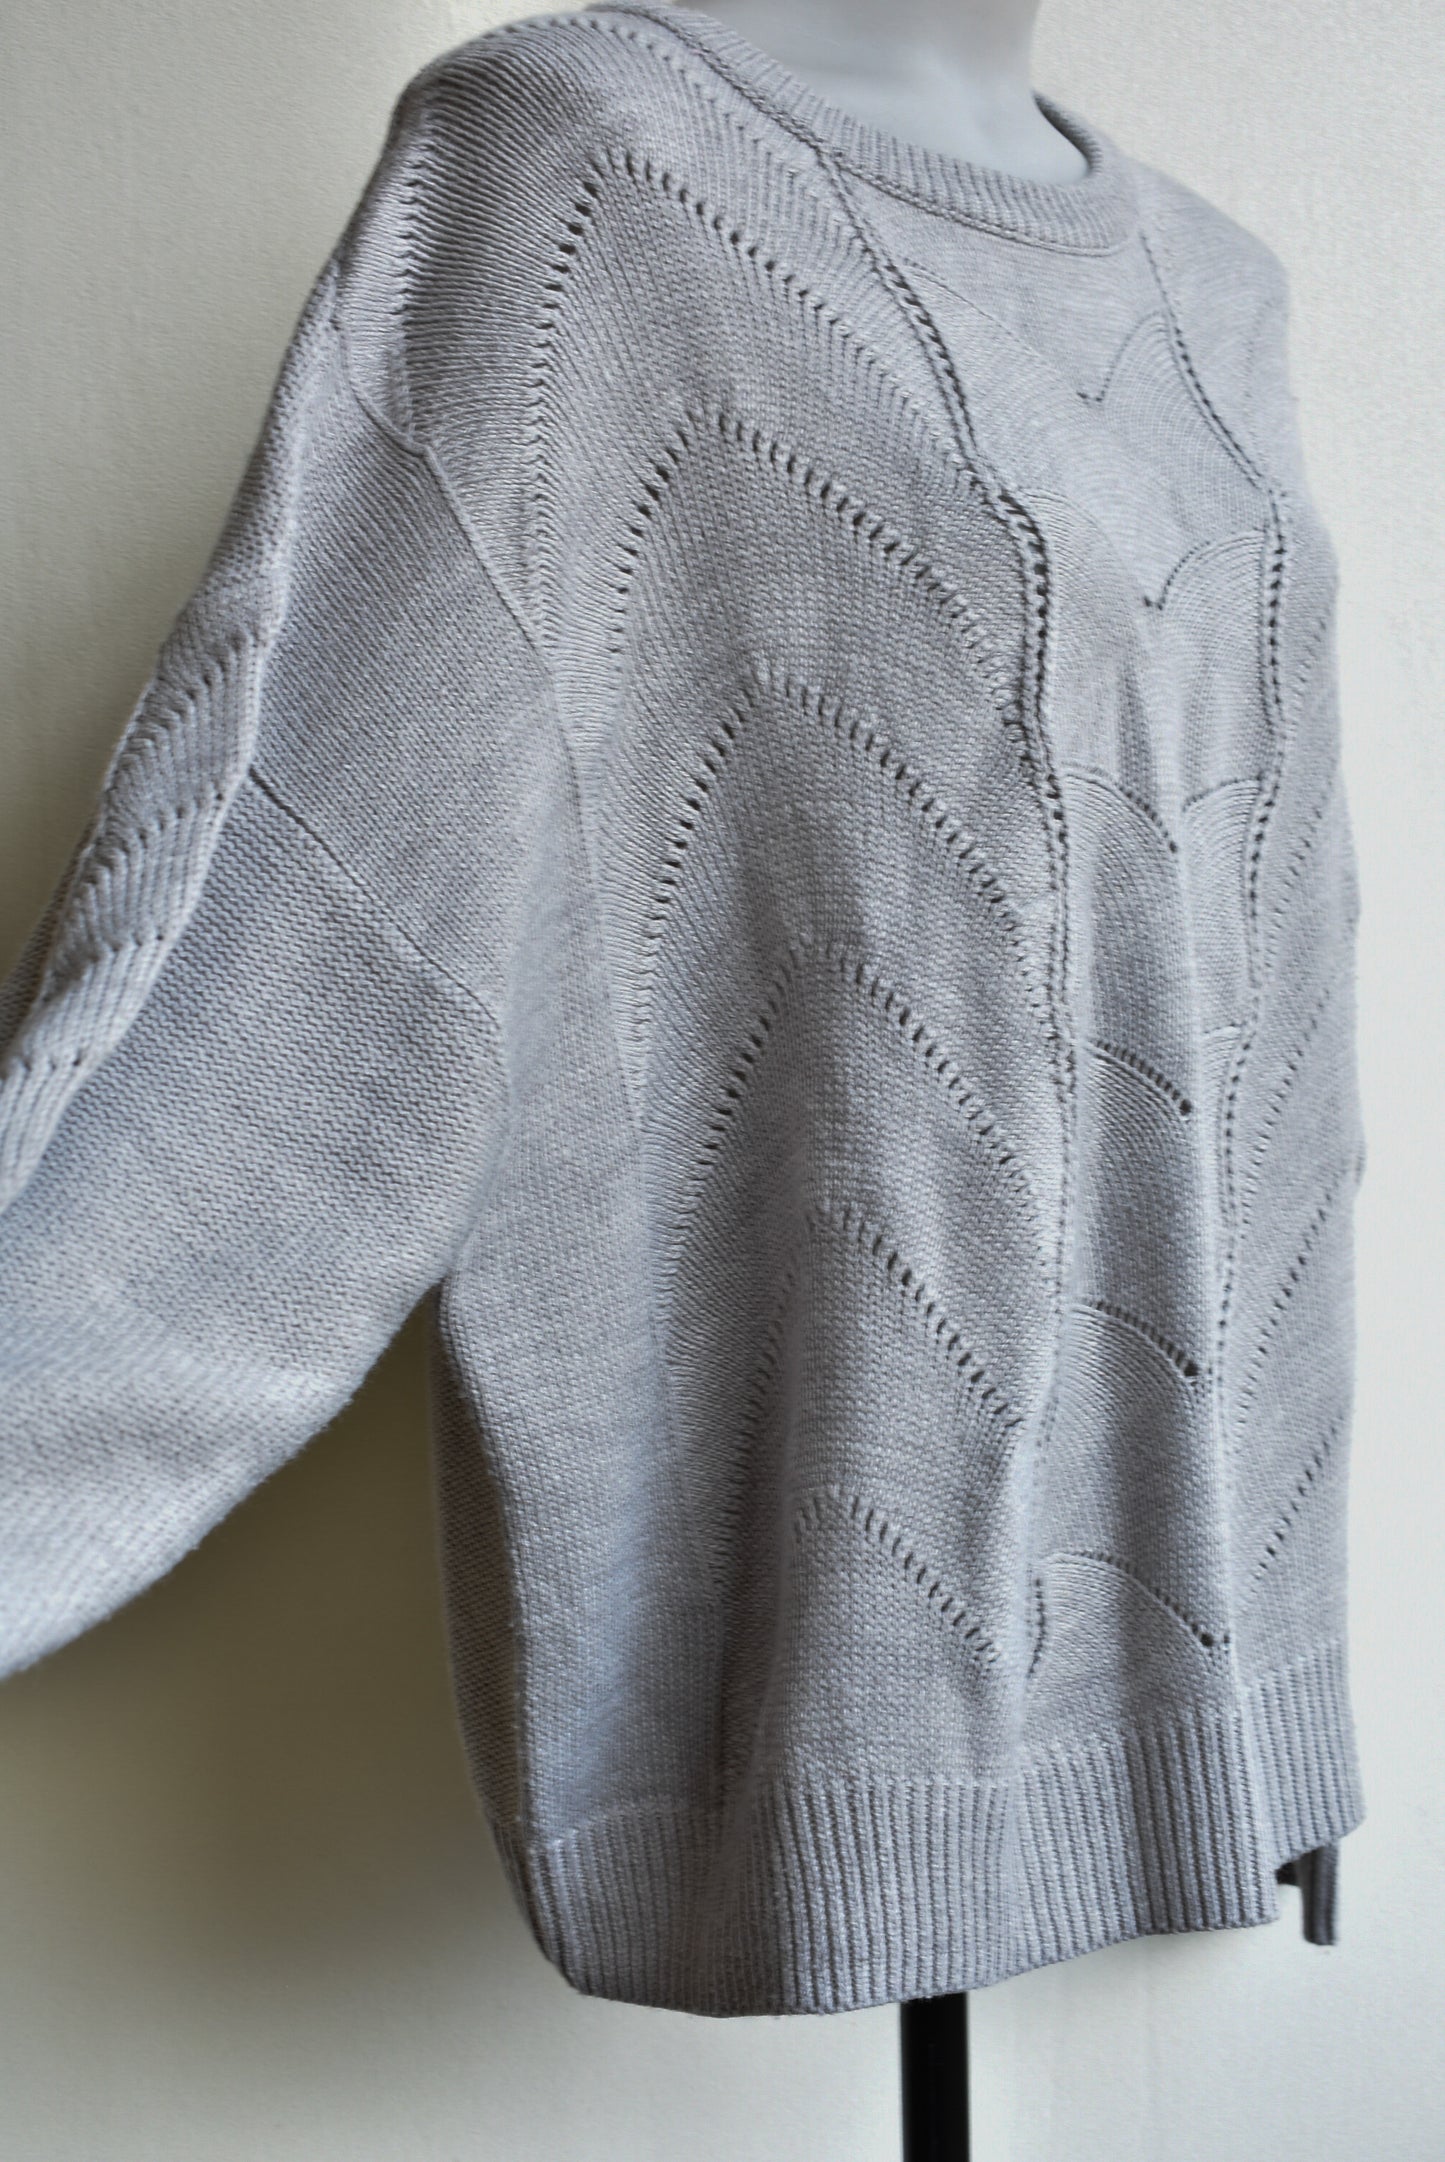 Spirit grey knit-texture top, size 18